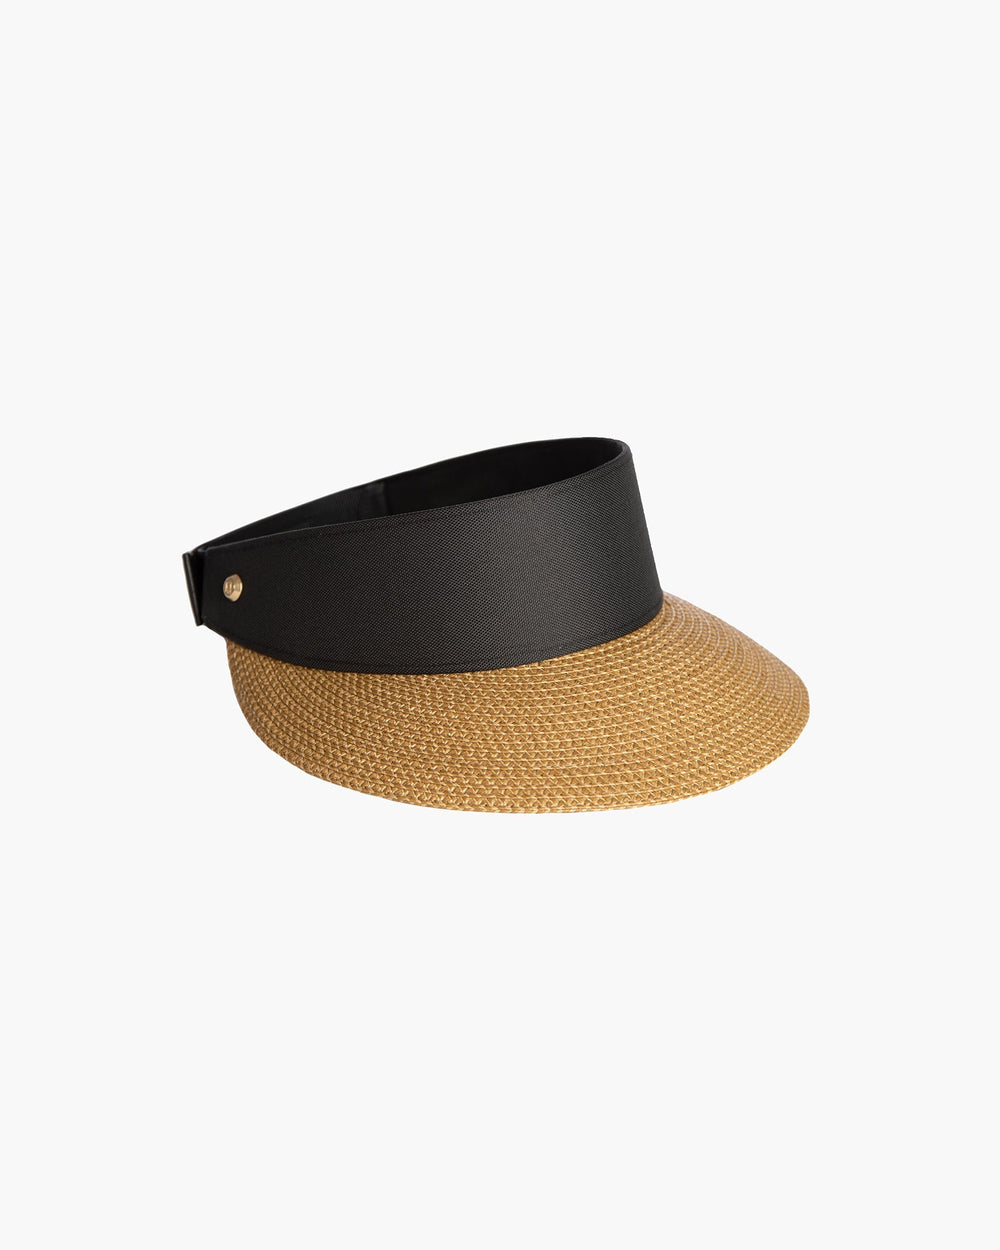 Champ Visor Hat | Women's Straw Hat for Sale | Eric Javits | Eric Javits